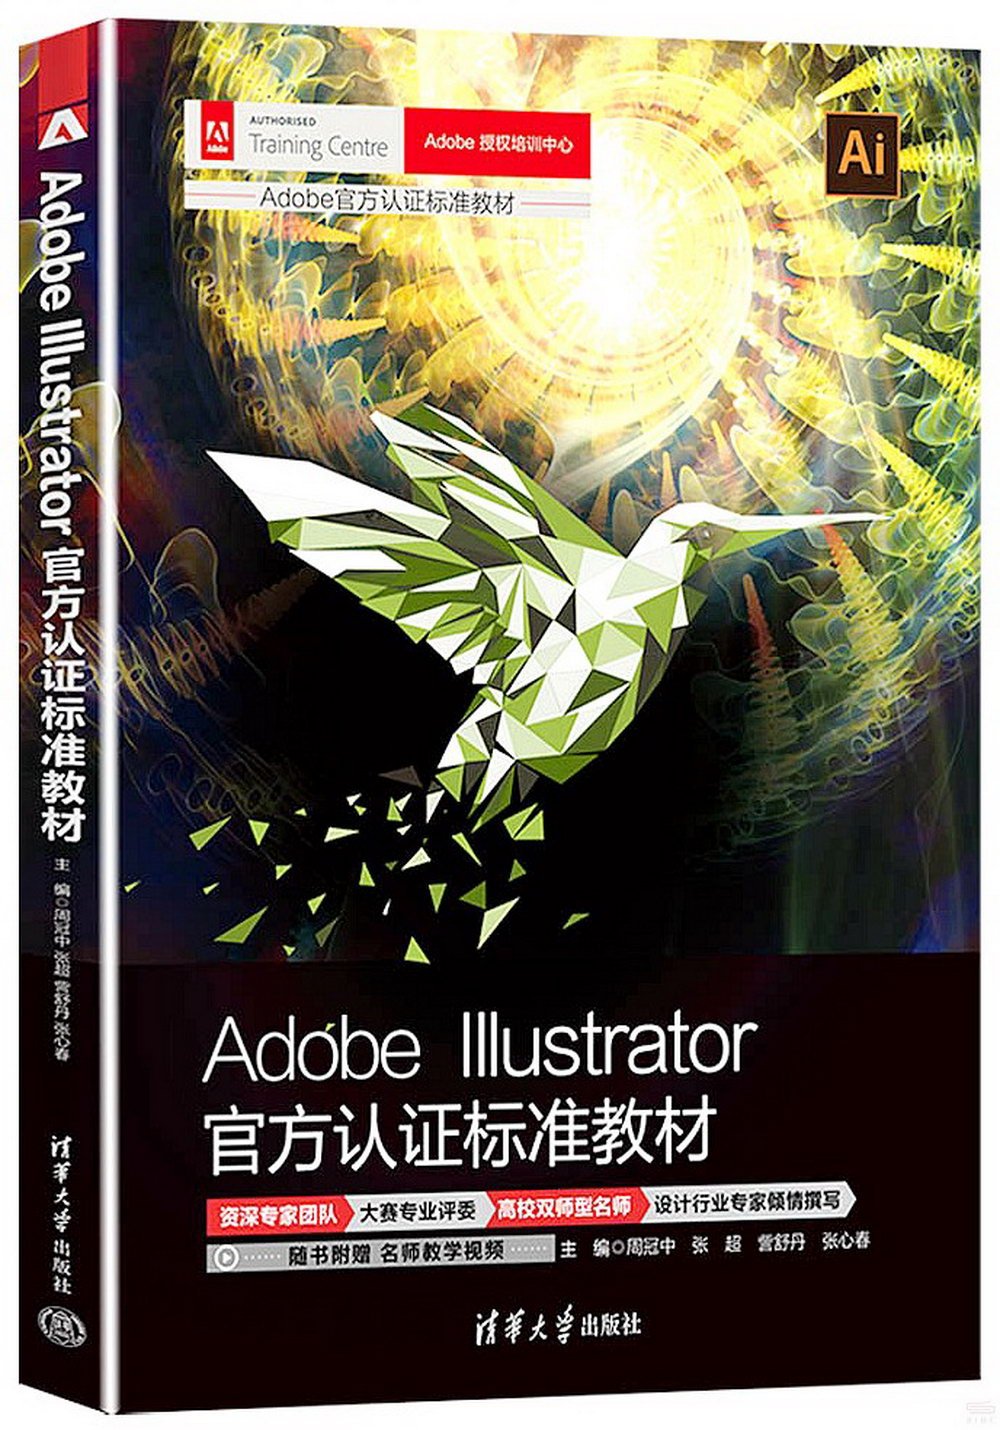 Adobe Illustrator官方認證標準教材